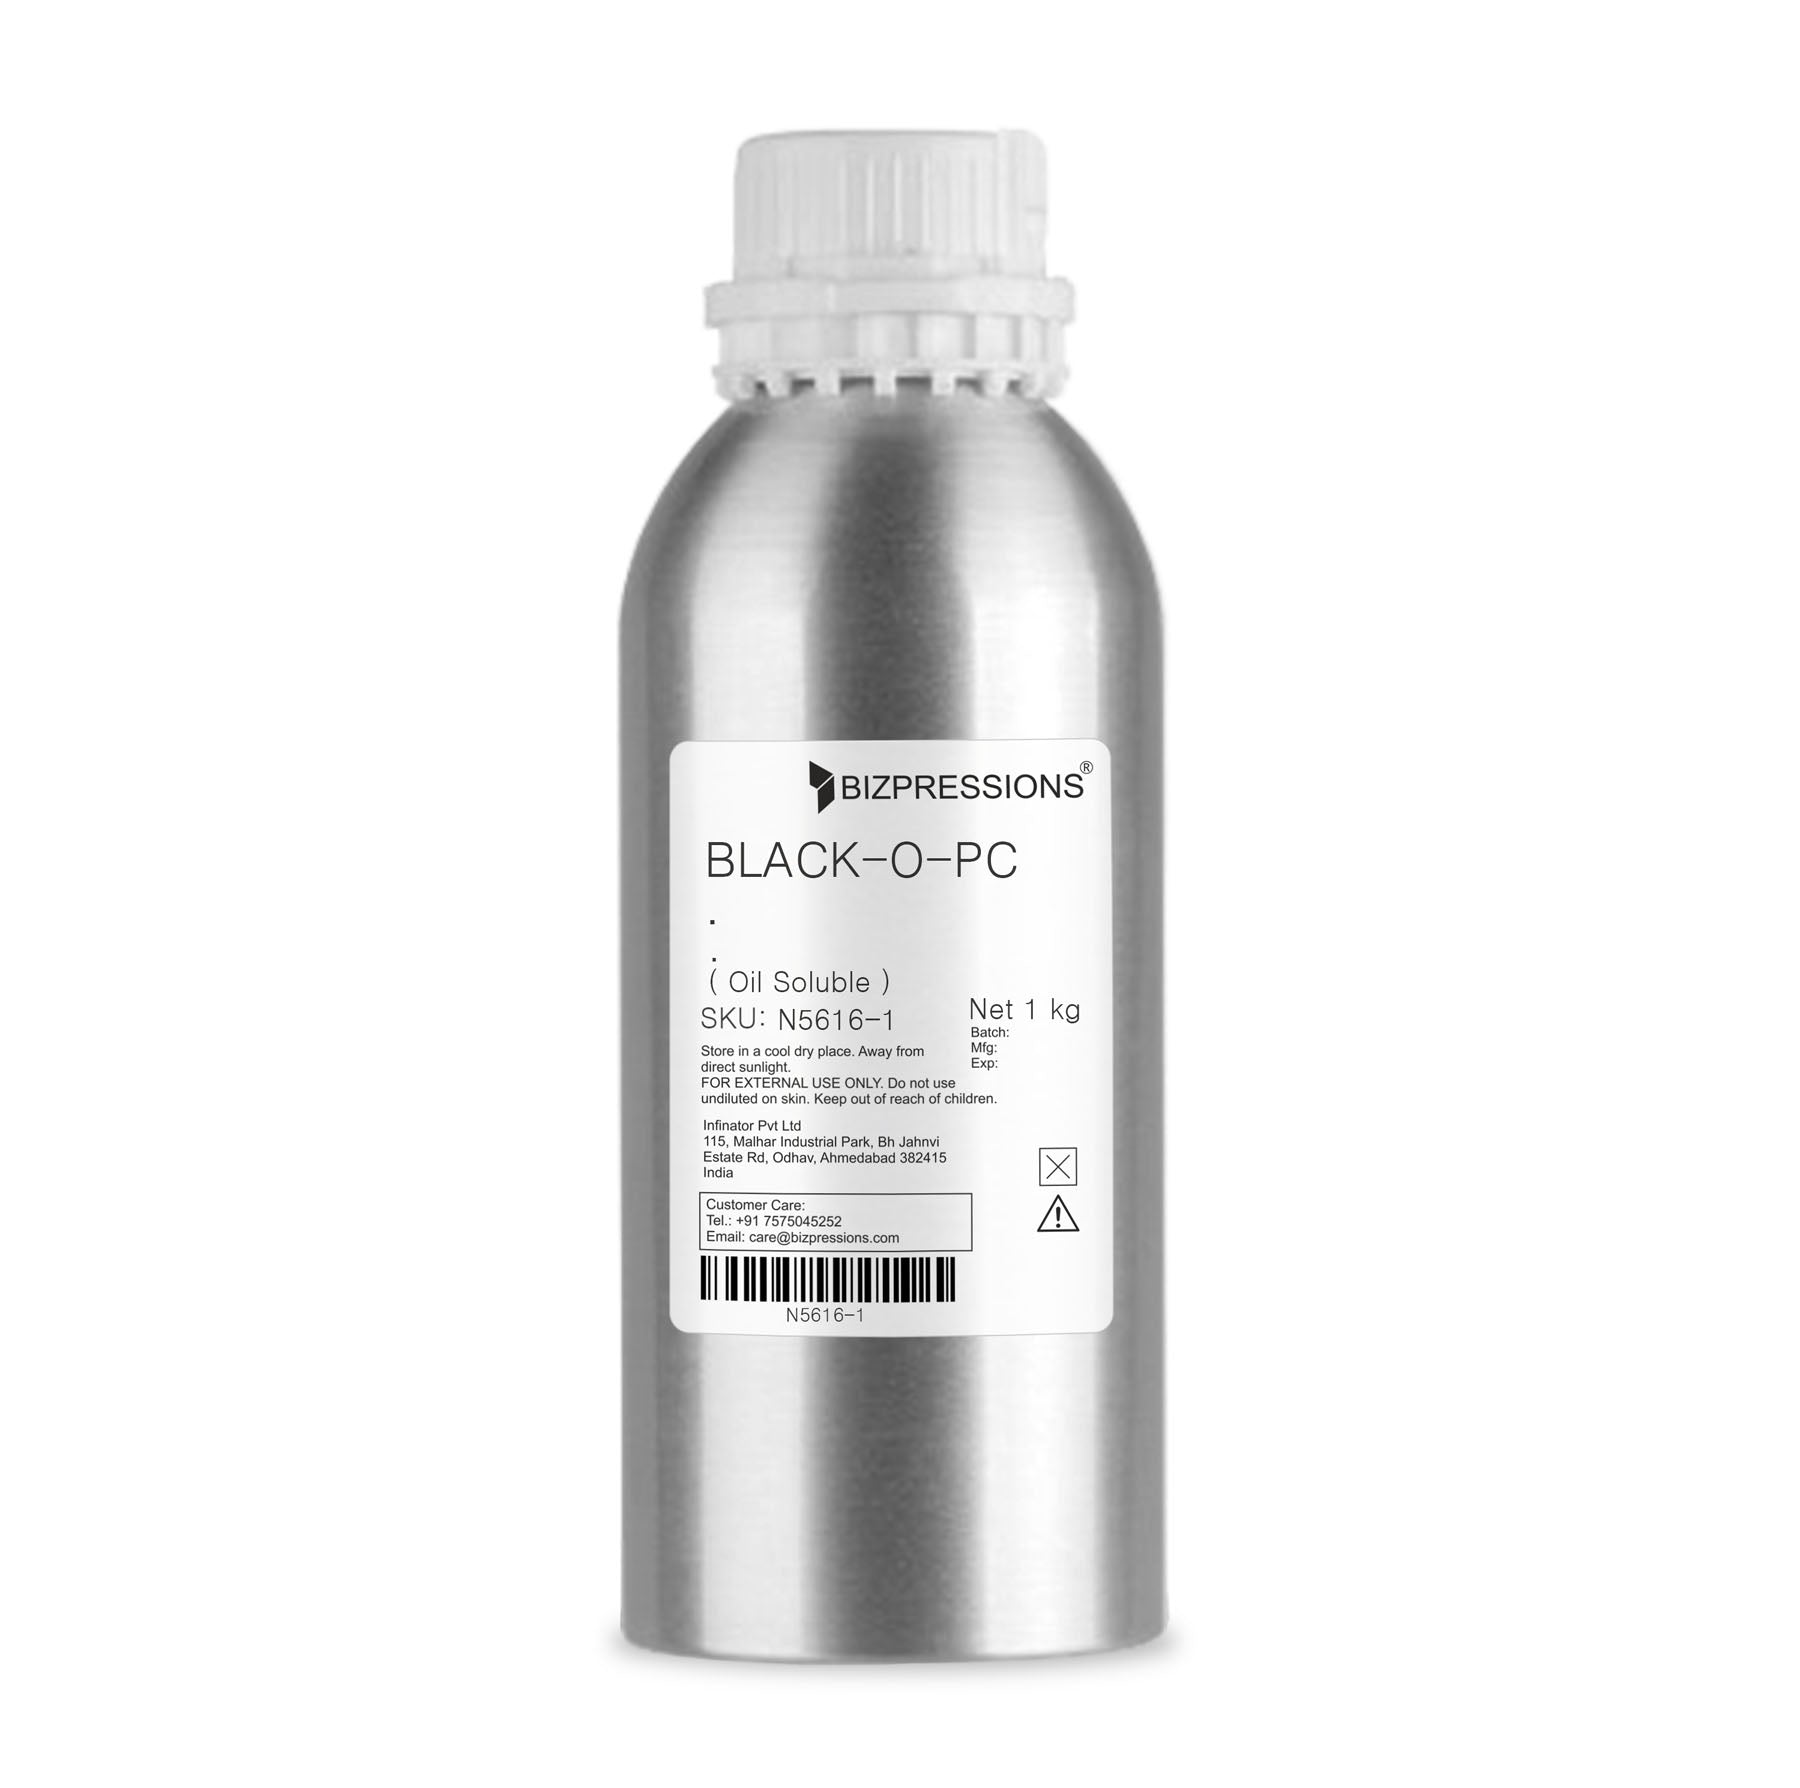 BLACK-O-PC - Fragrance ( Oil Soluble ) - 1 kg